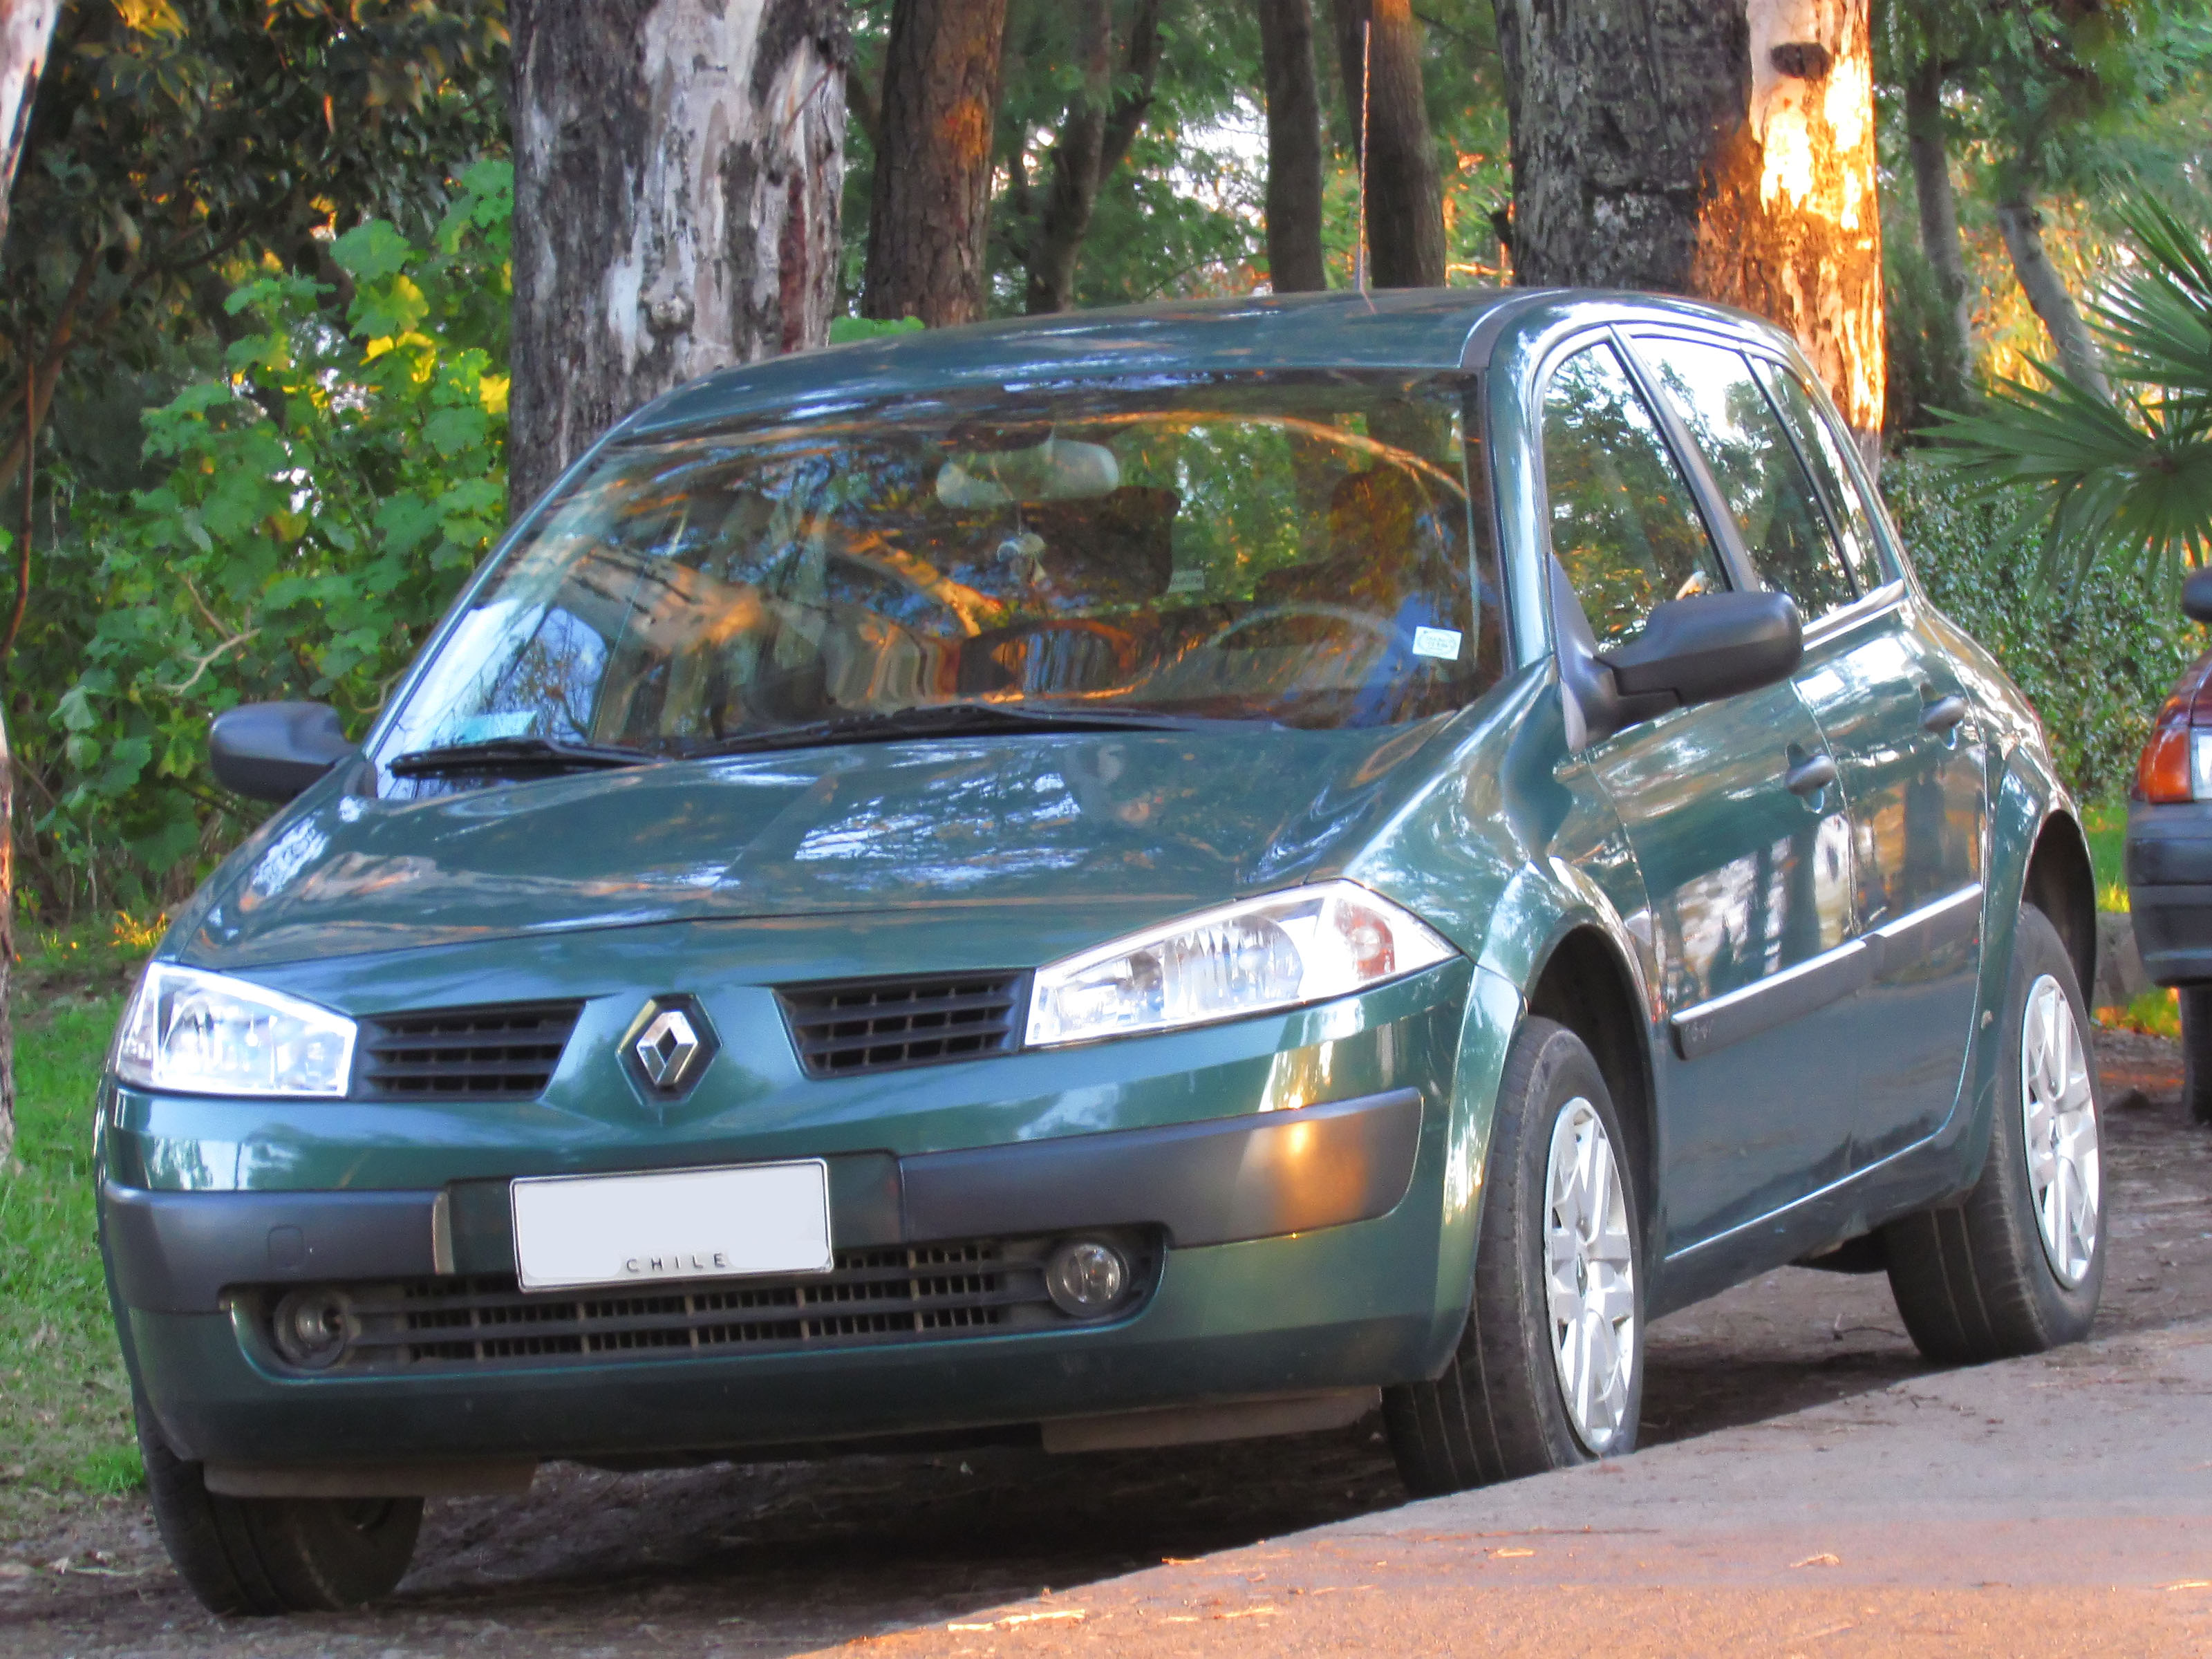 File:Renault Megane 3 Version 2014.jpg - Wikimedia Commons